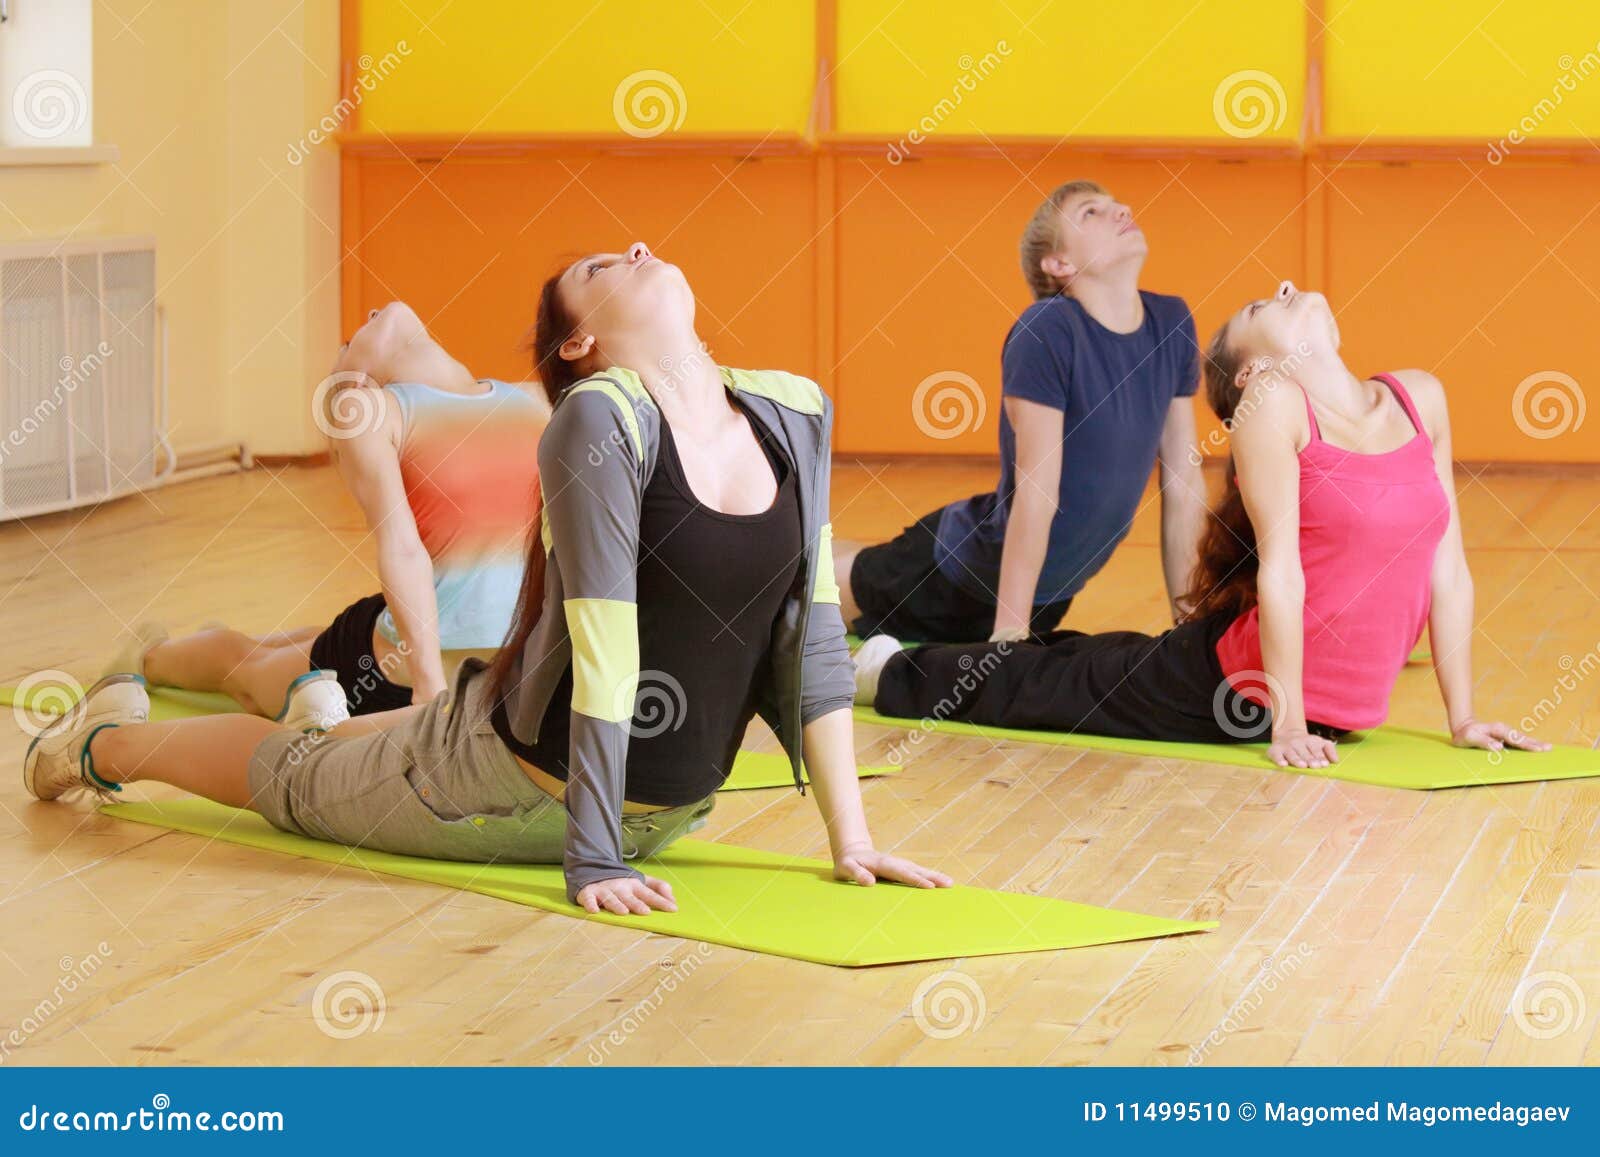 bending backs in group aerobics